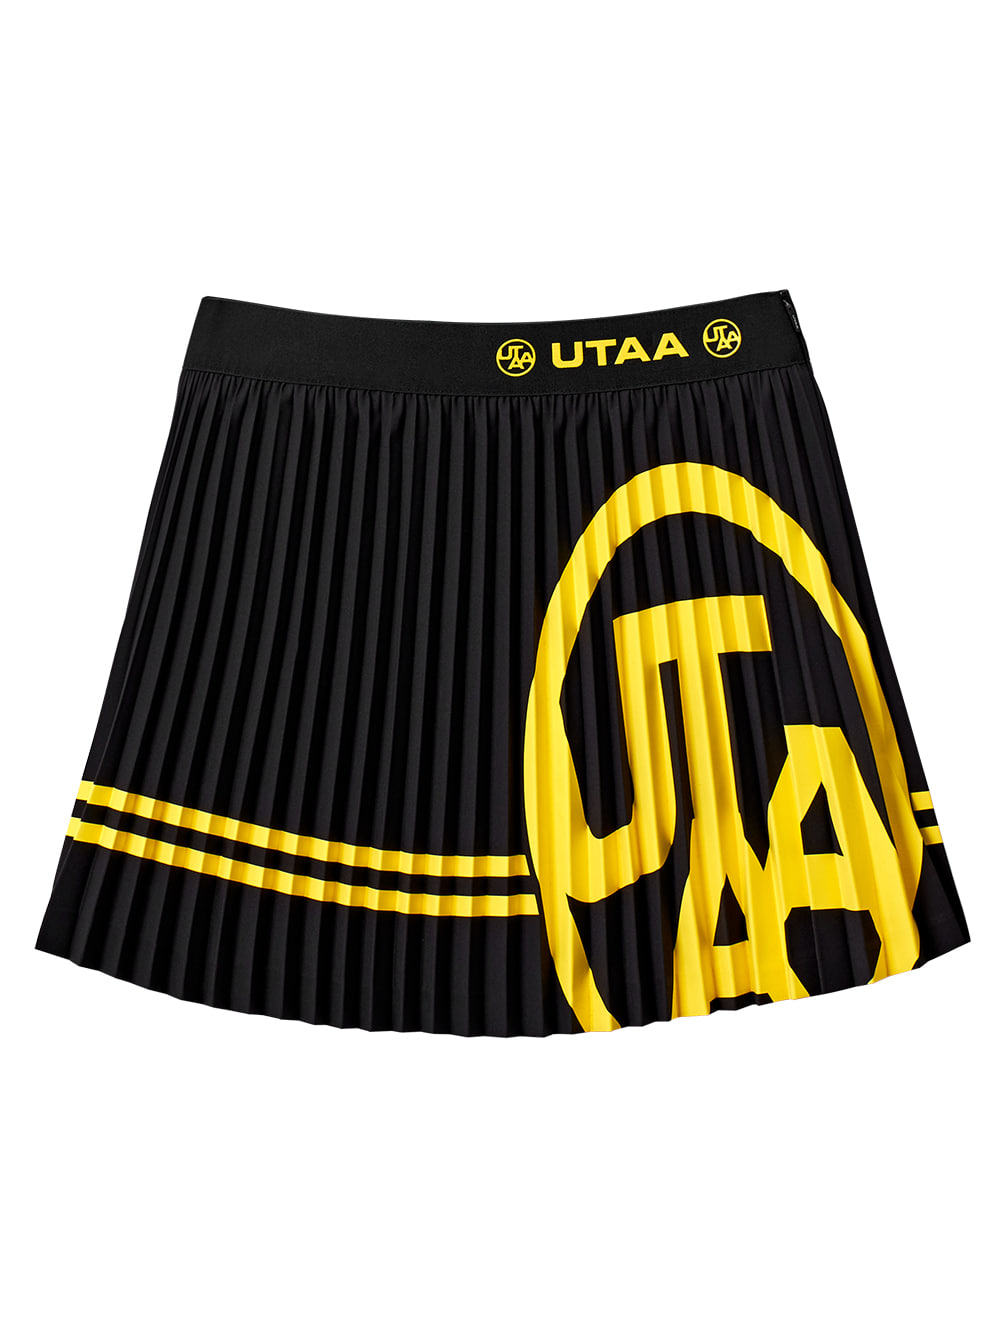 UTAA Crinkle Line Symbol Skirt : Black (UC2SKF530BK)